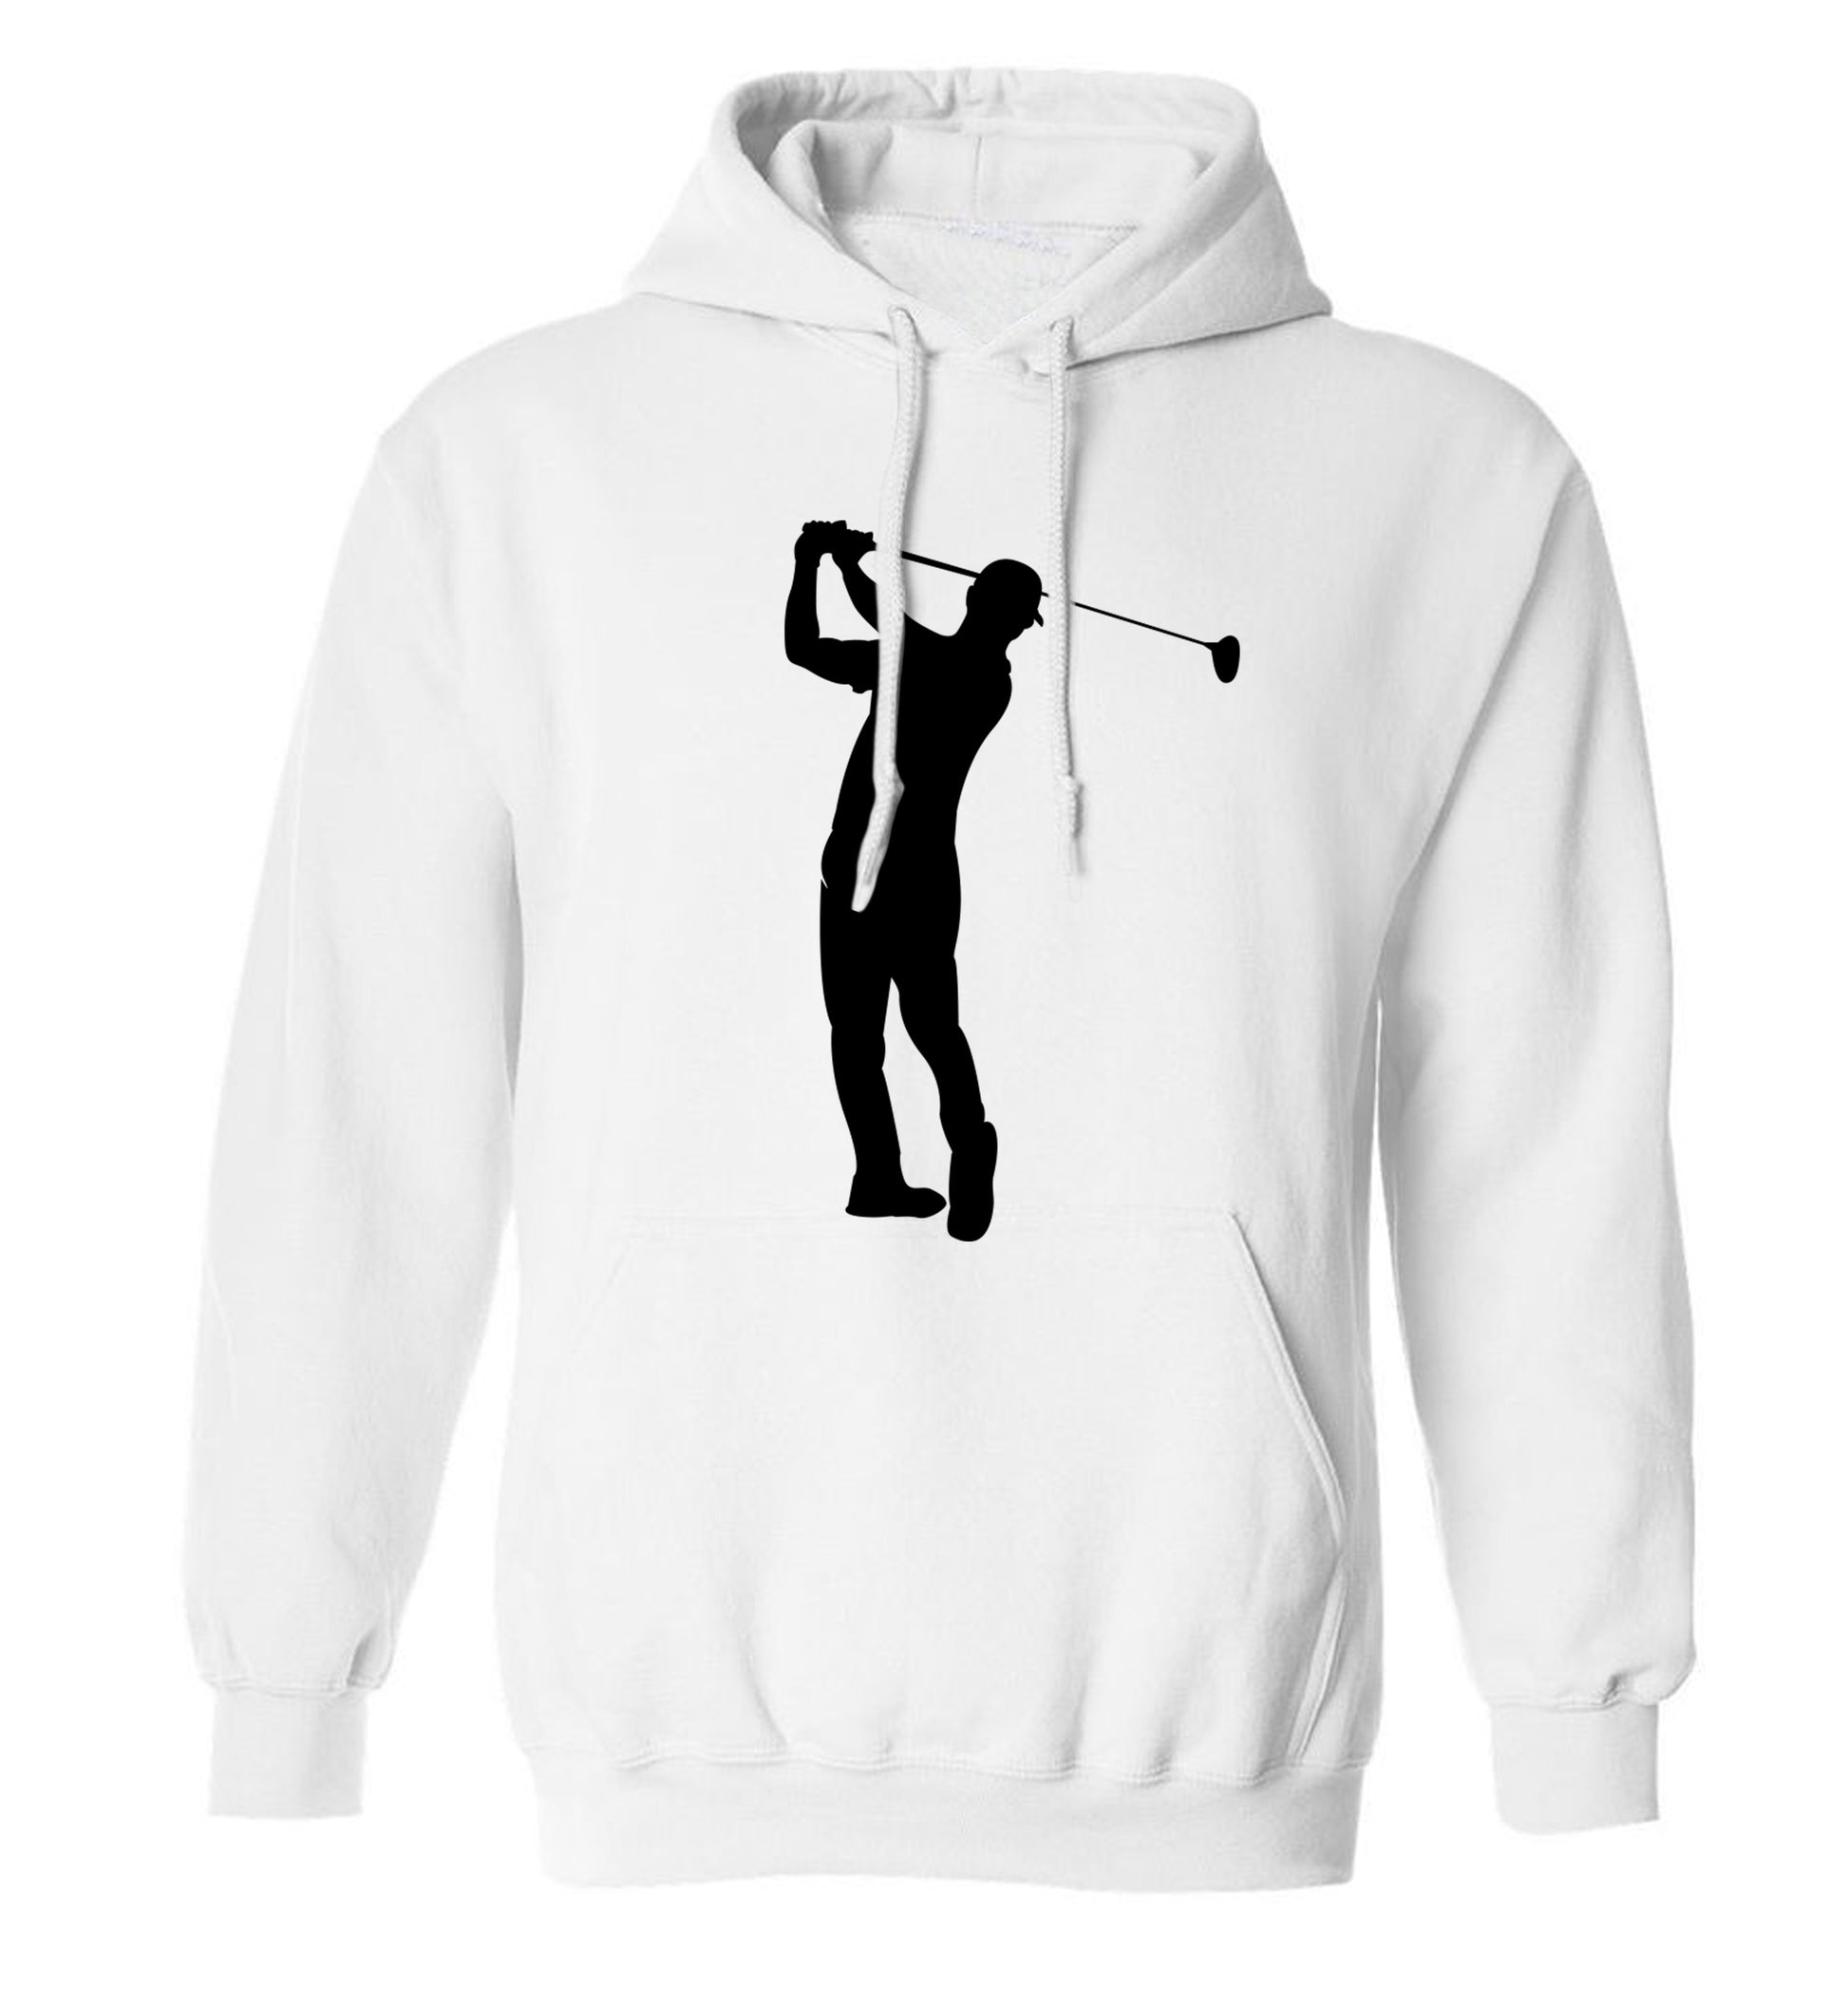 Golfer Illustration adults unisex white hoodie 2XL